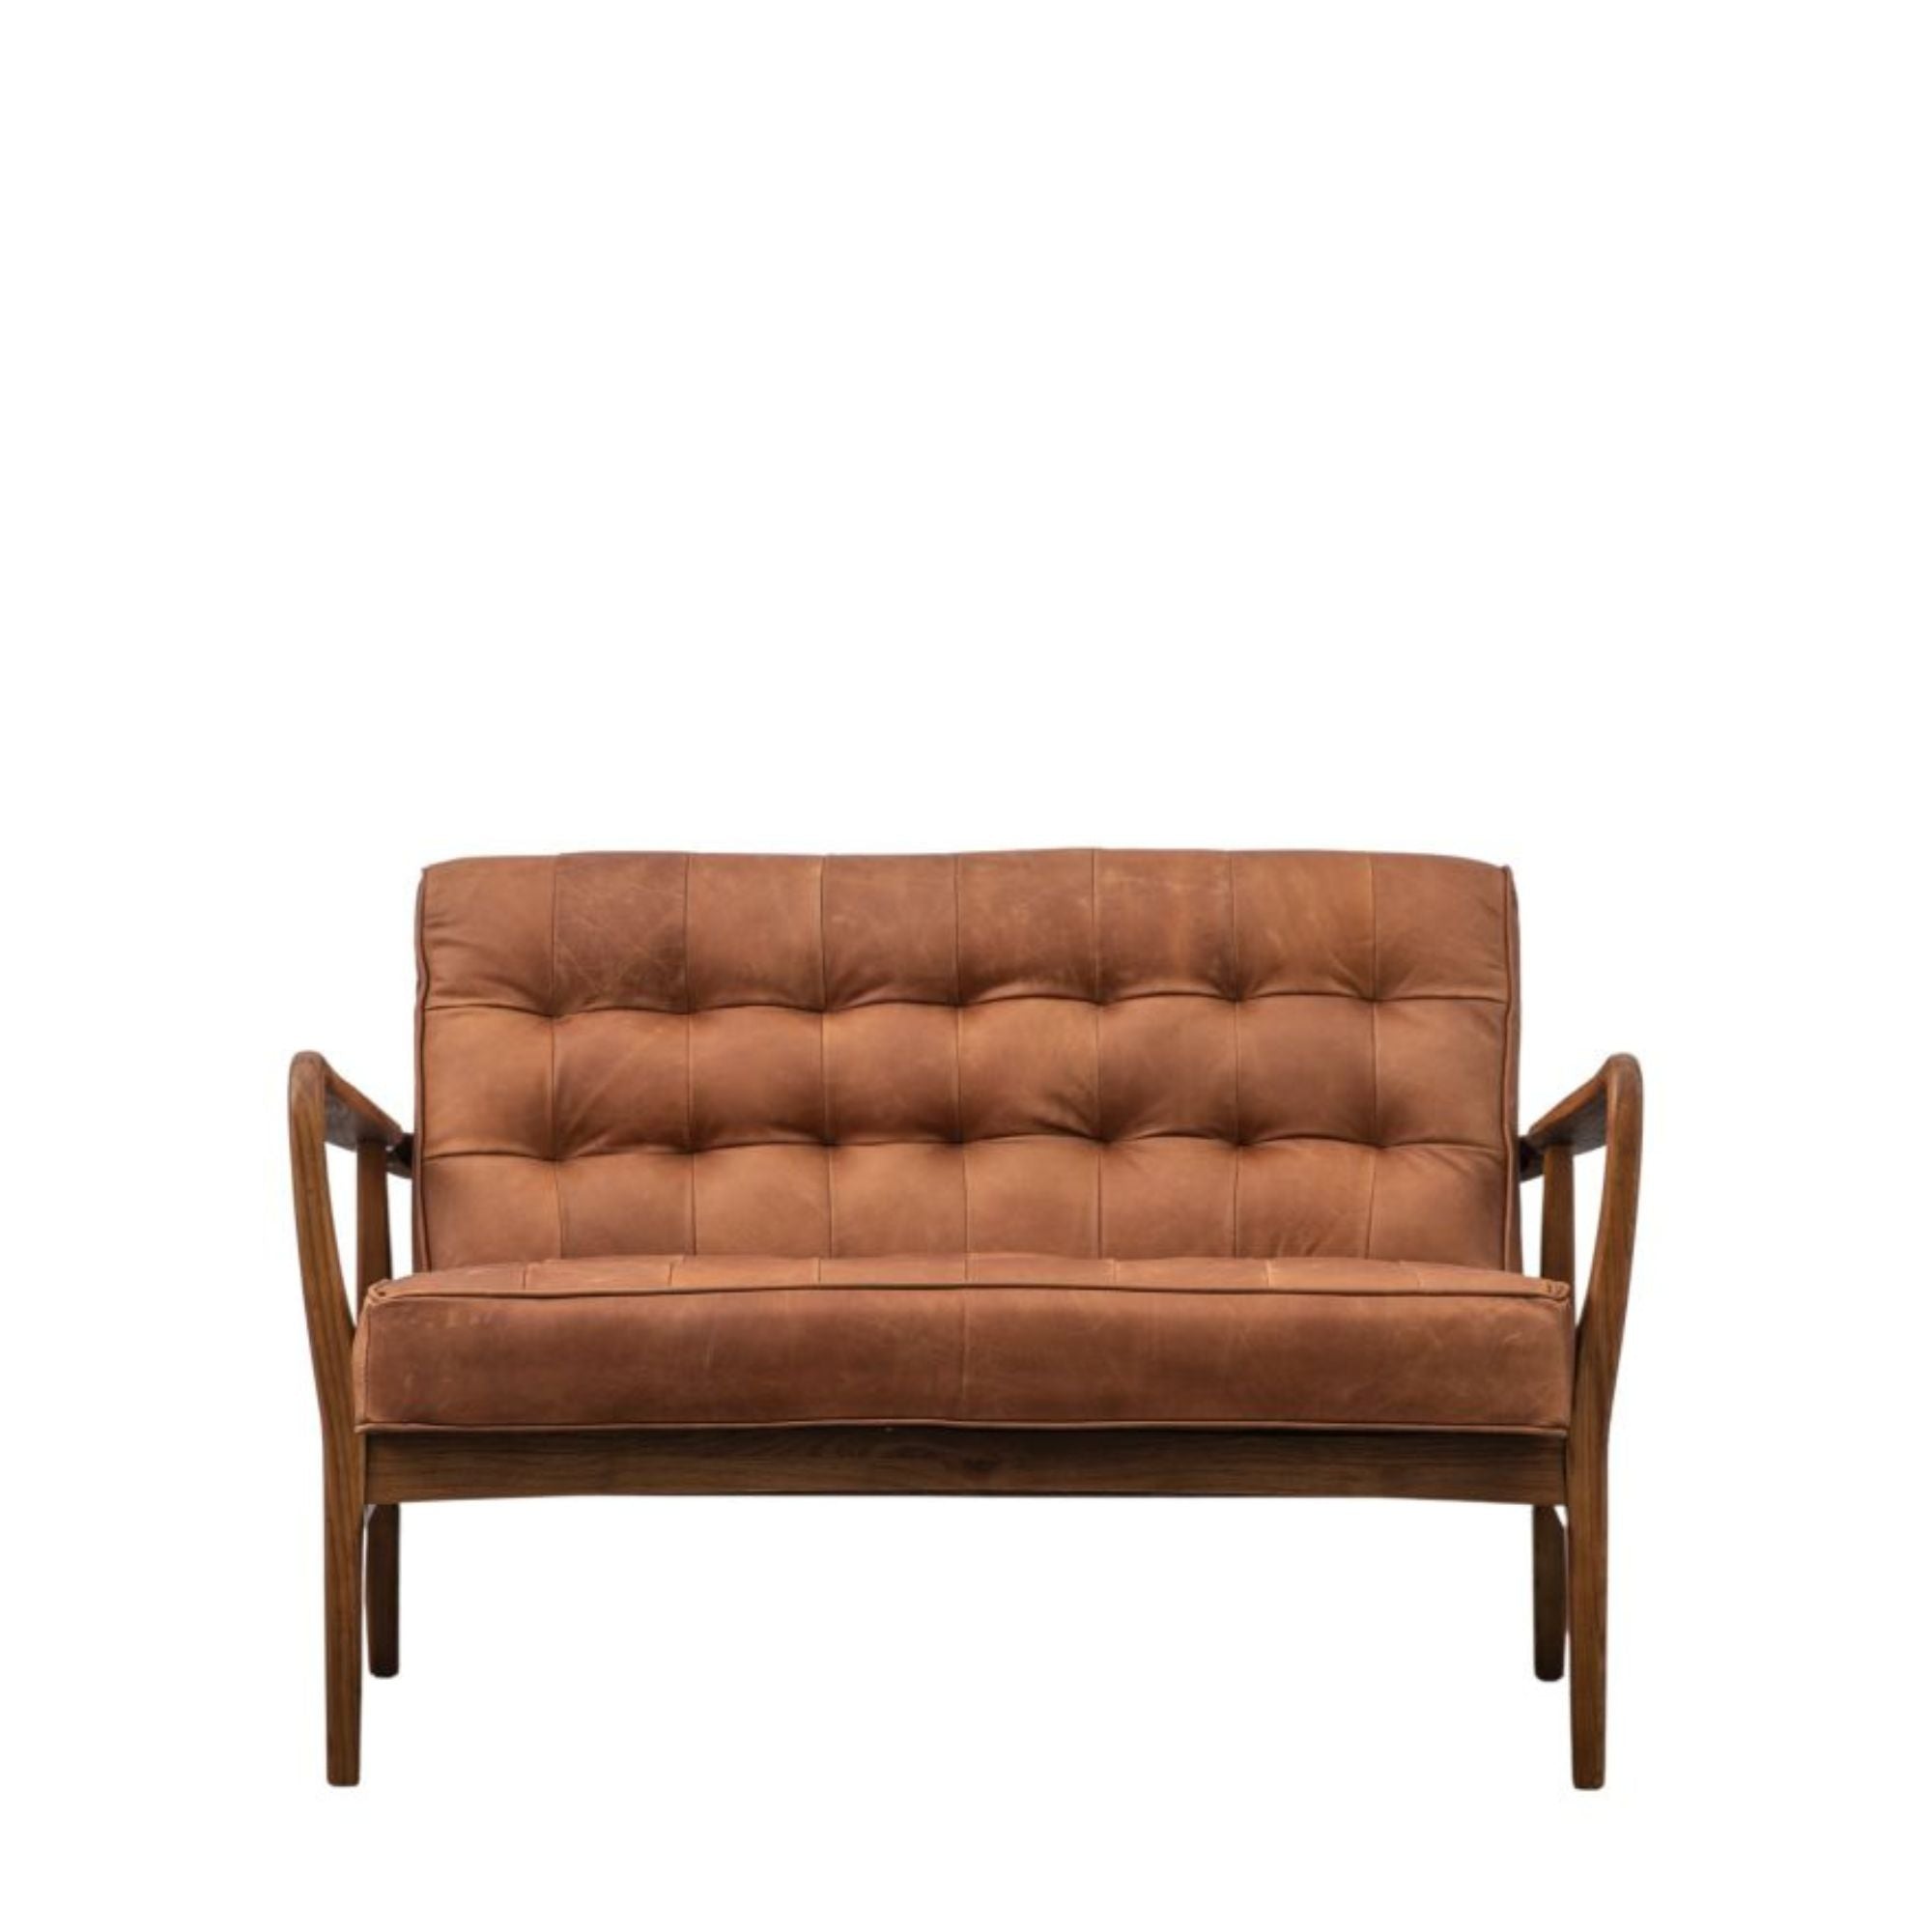 Ronson 2 seat mid-century sofa in vintage brown leather upholstery | MalletandPlane.com